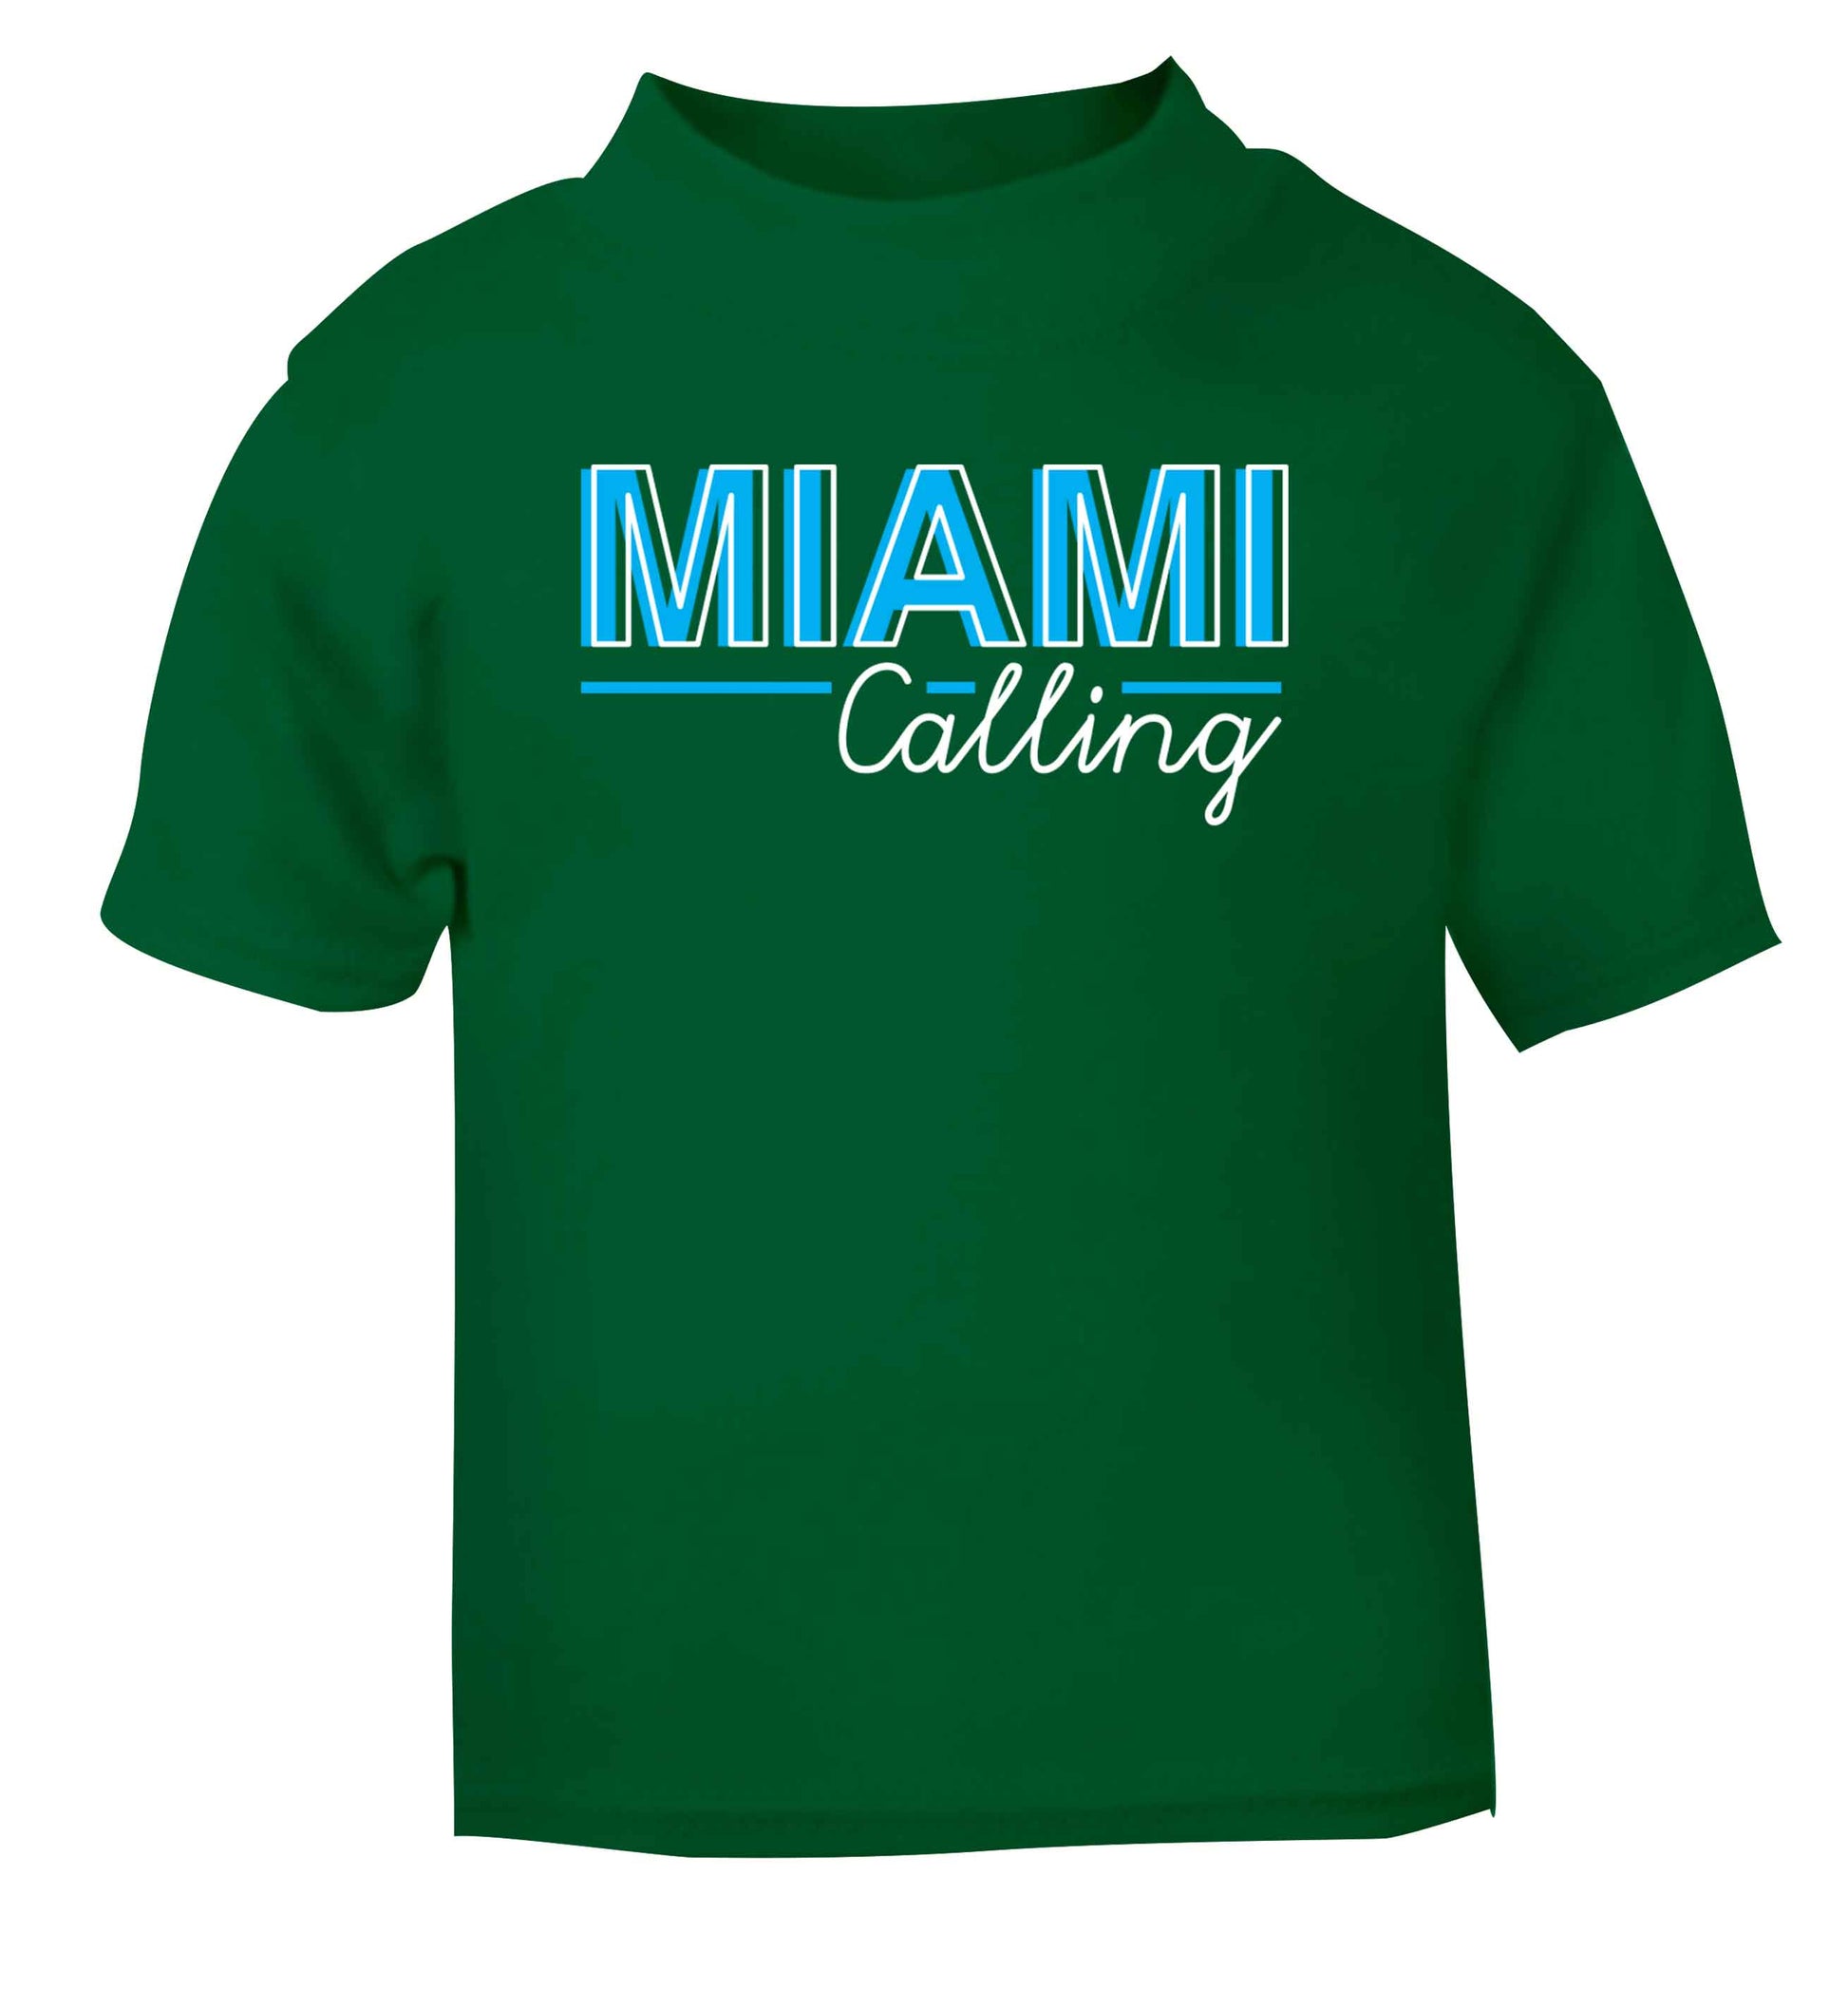 Miami calling green Baby Toddler Tshirt 2 Years